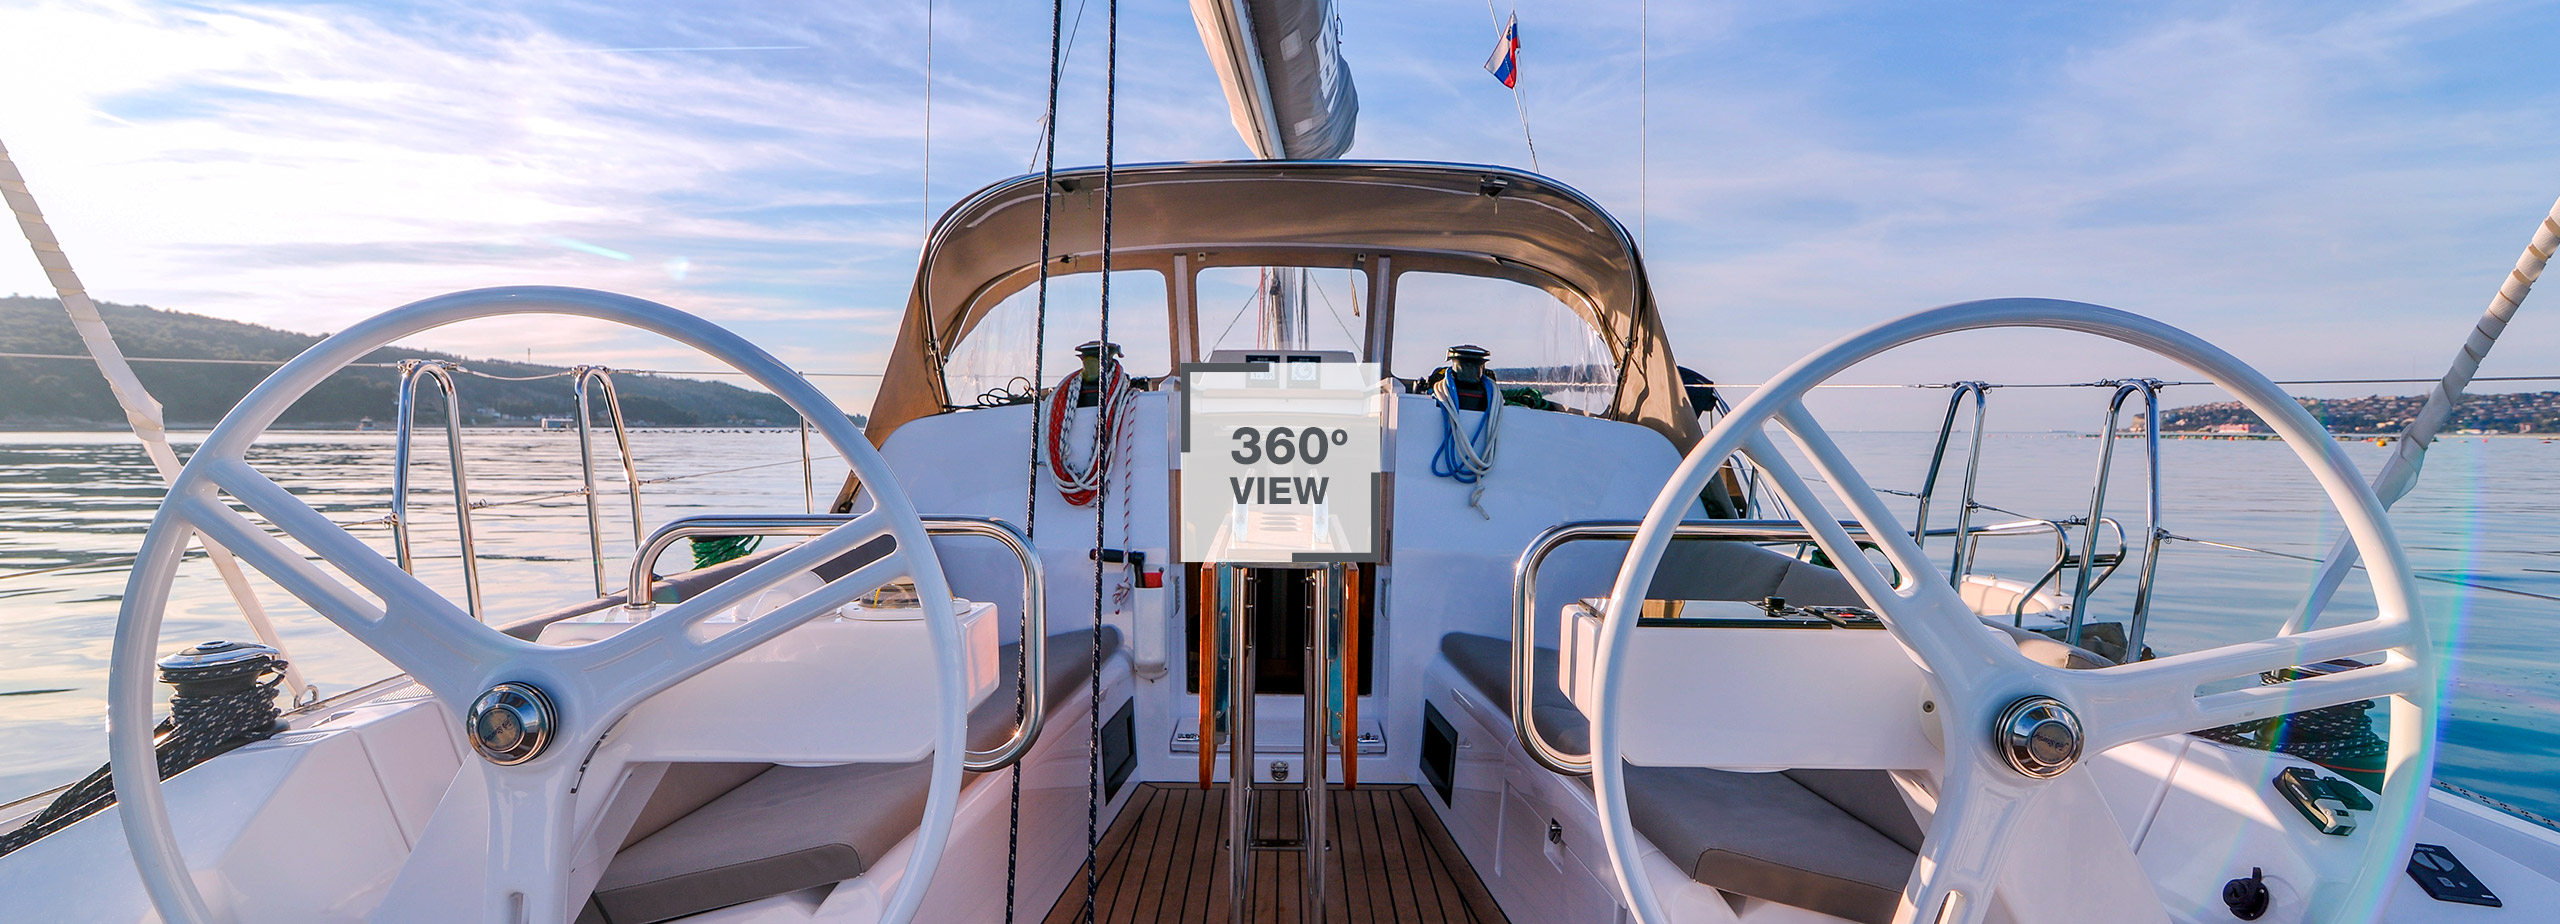 elan-yachts-e4-performance-sailboat-360-image